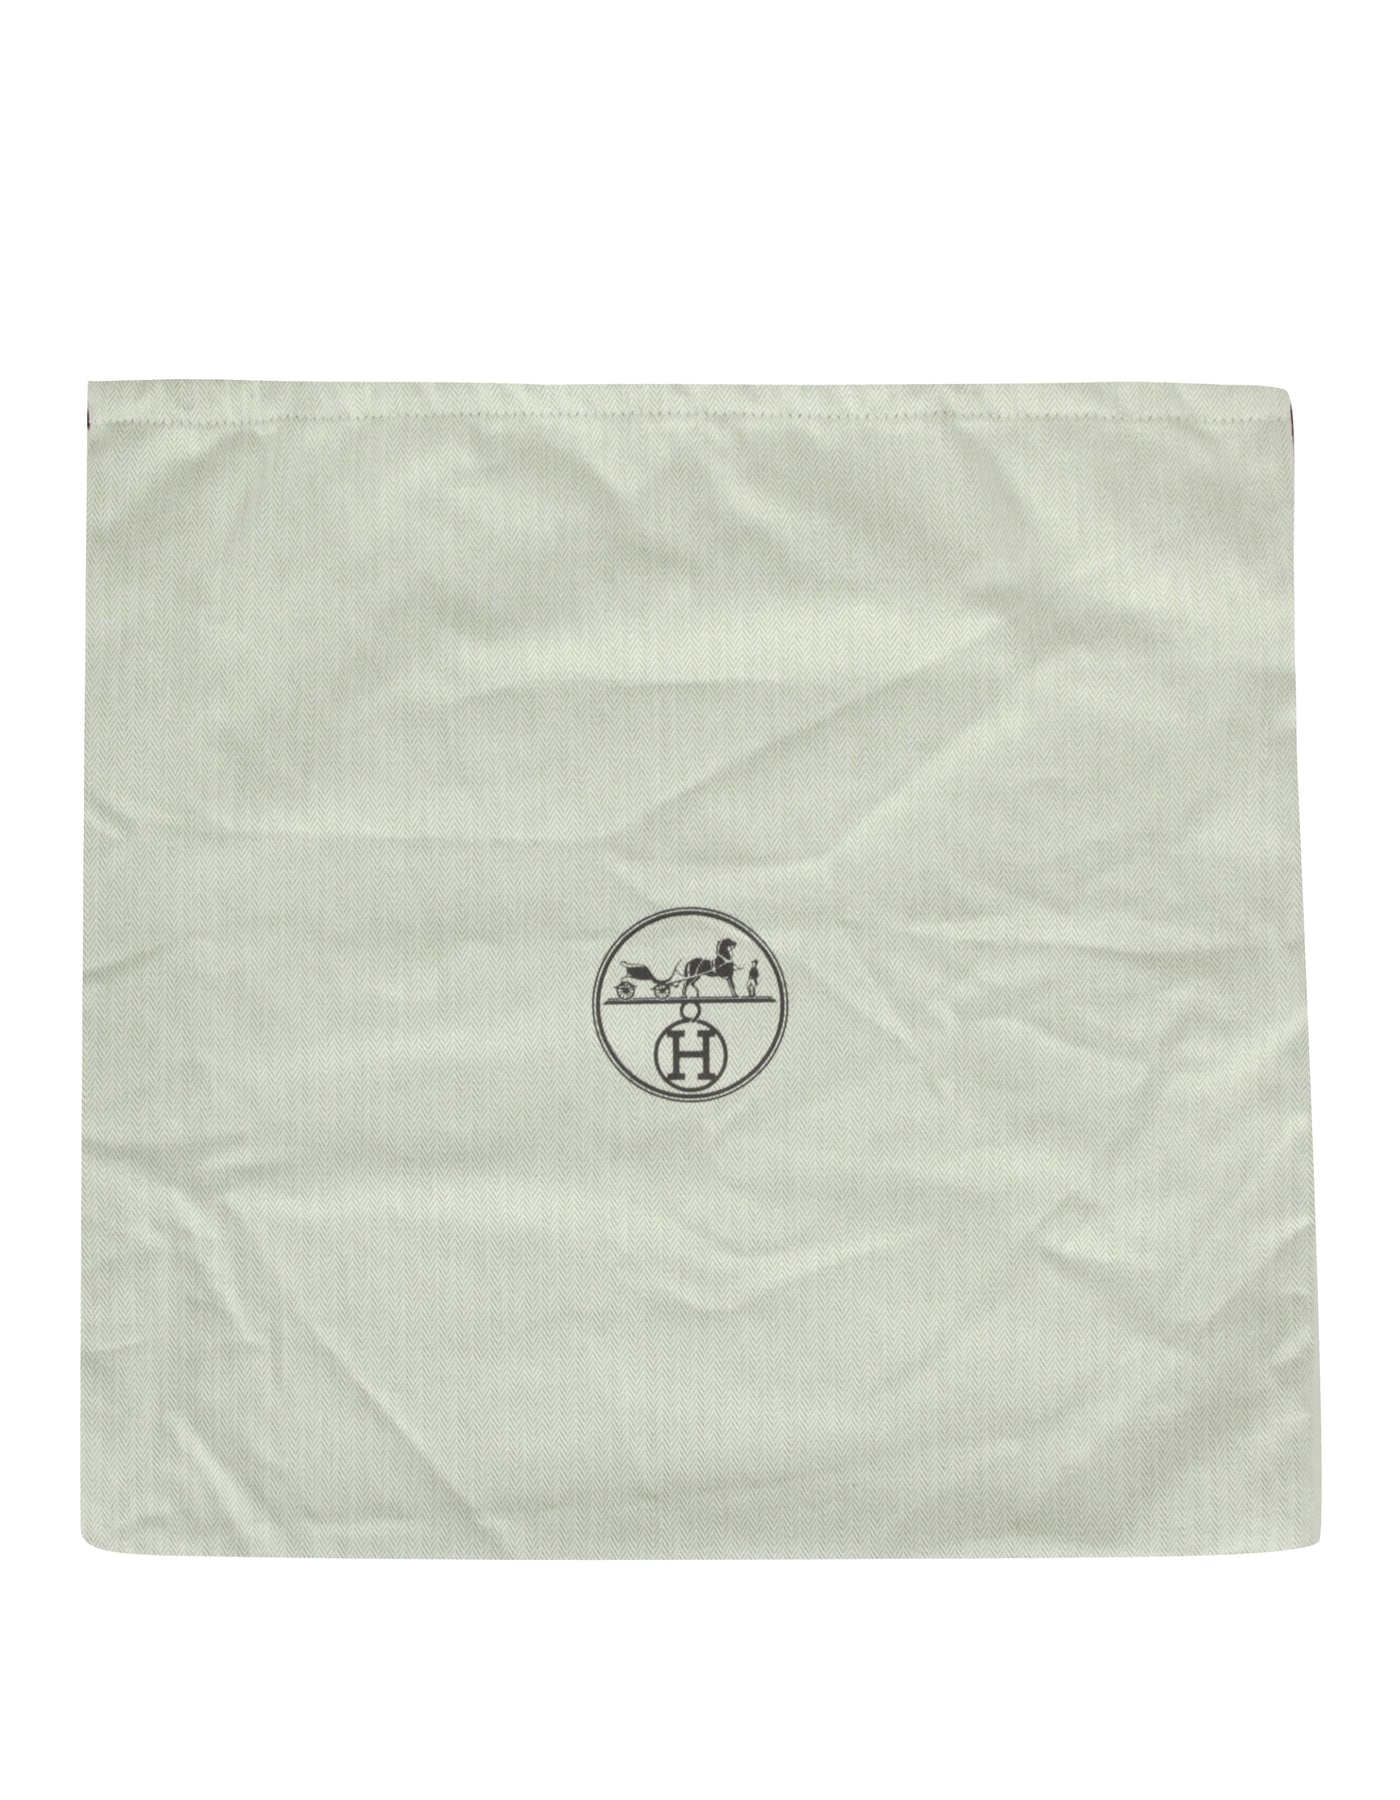 Hermès Cabasellier 31 Bag ¥ 379,500 Lilas Taurillon Clemence Japan Website  H082201CA09 #hermes #hermesnew #newhermes #hermes2022…